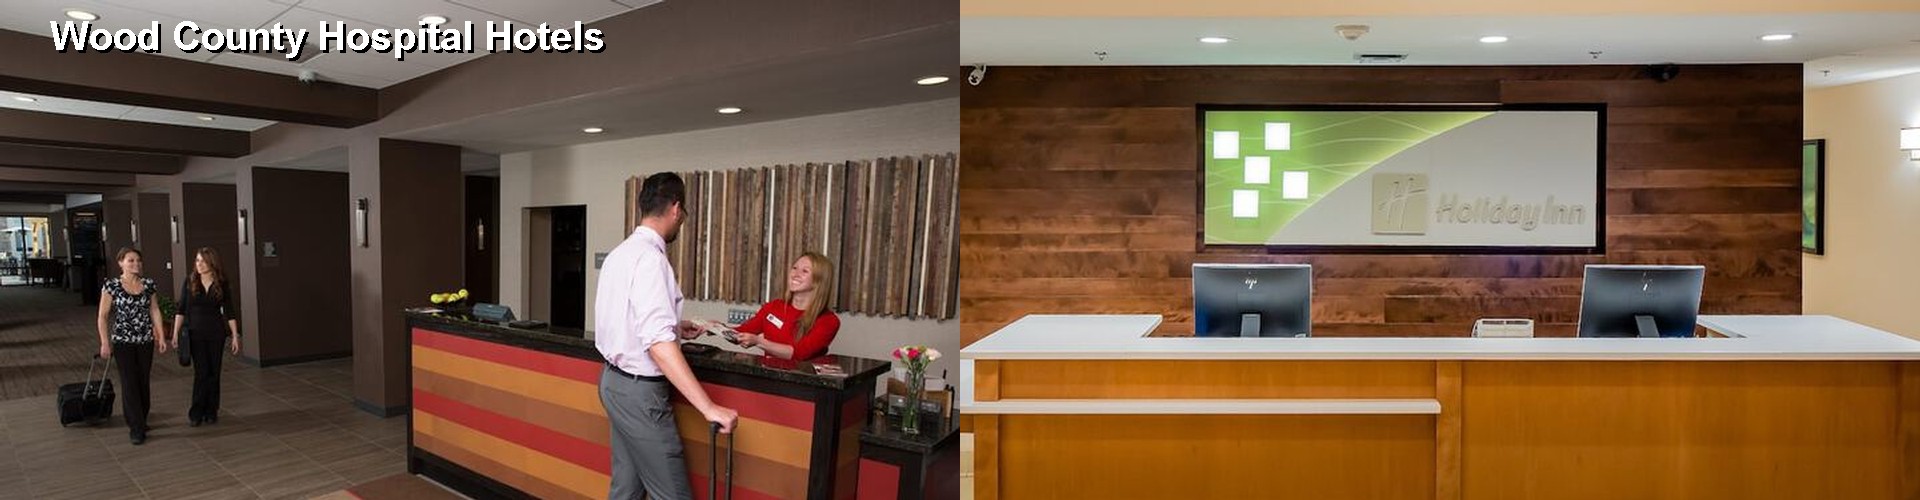 4 Best Hotels near Wood County Hospital